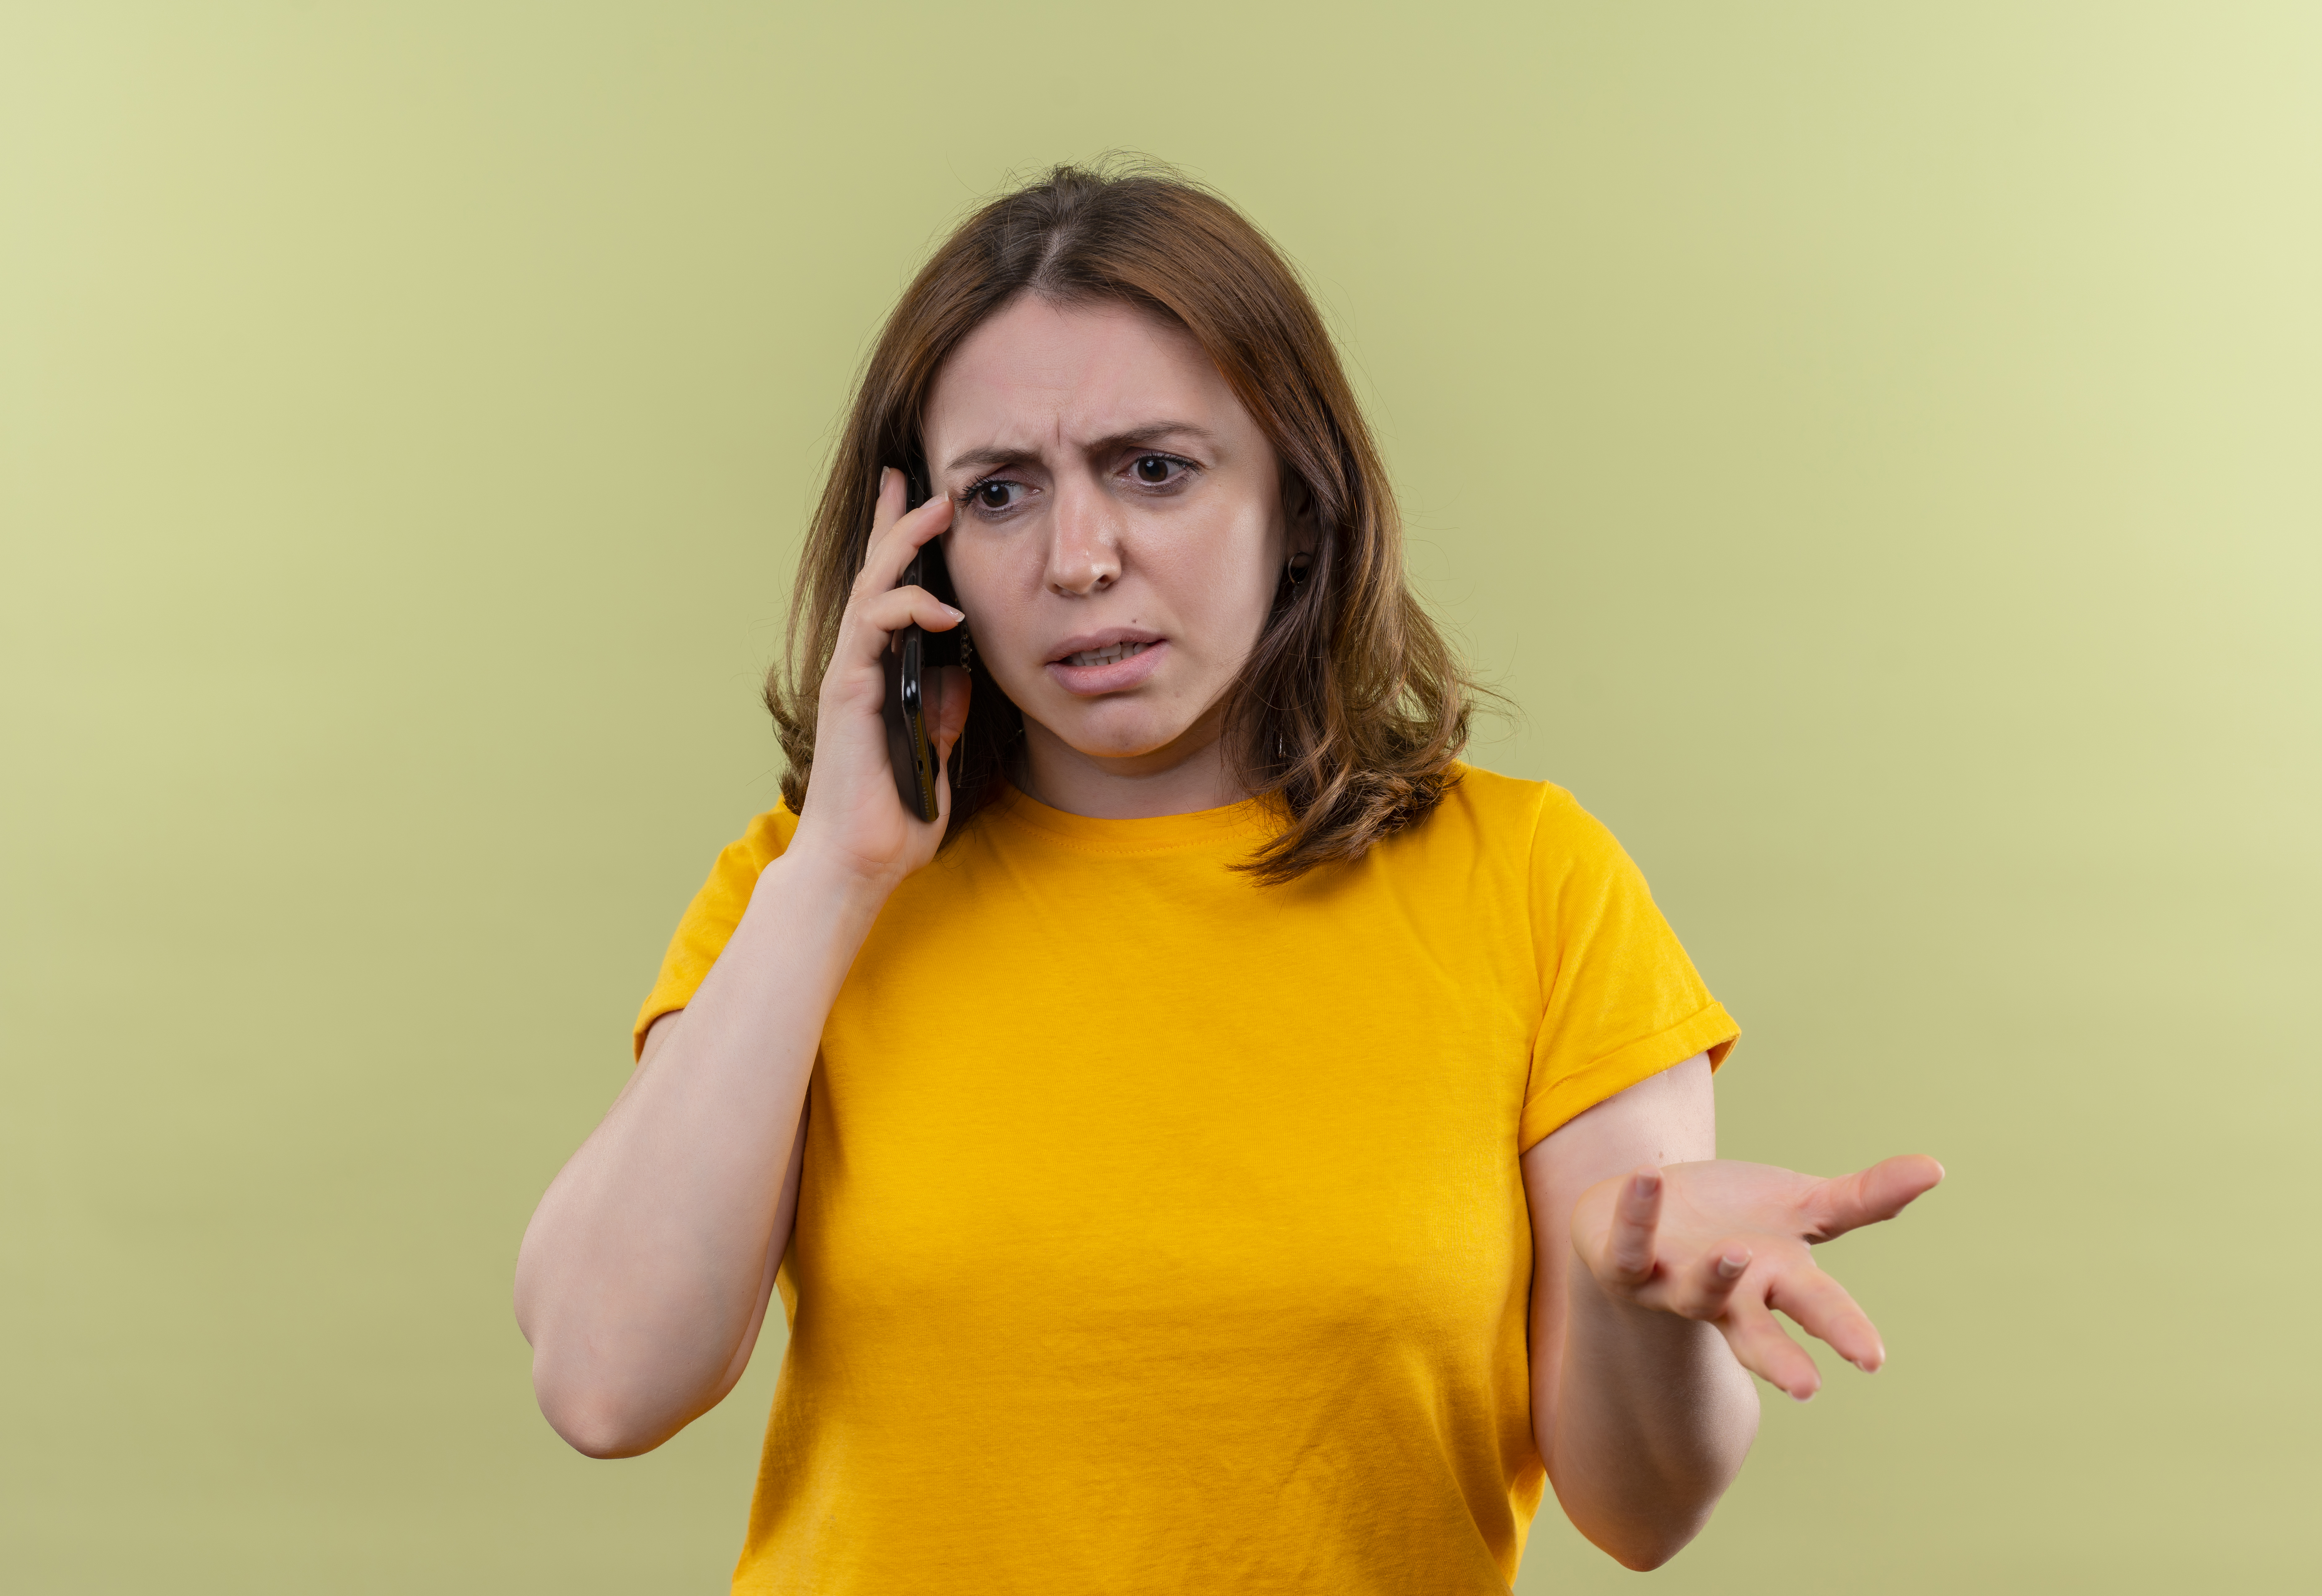 Woman looking unpleased as she talks on the phone | Source: stockking on Freepik